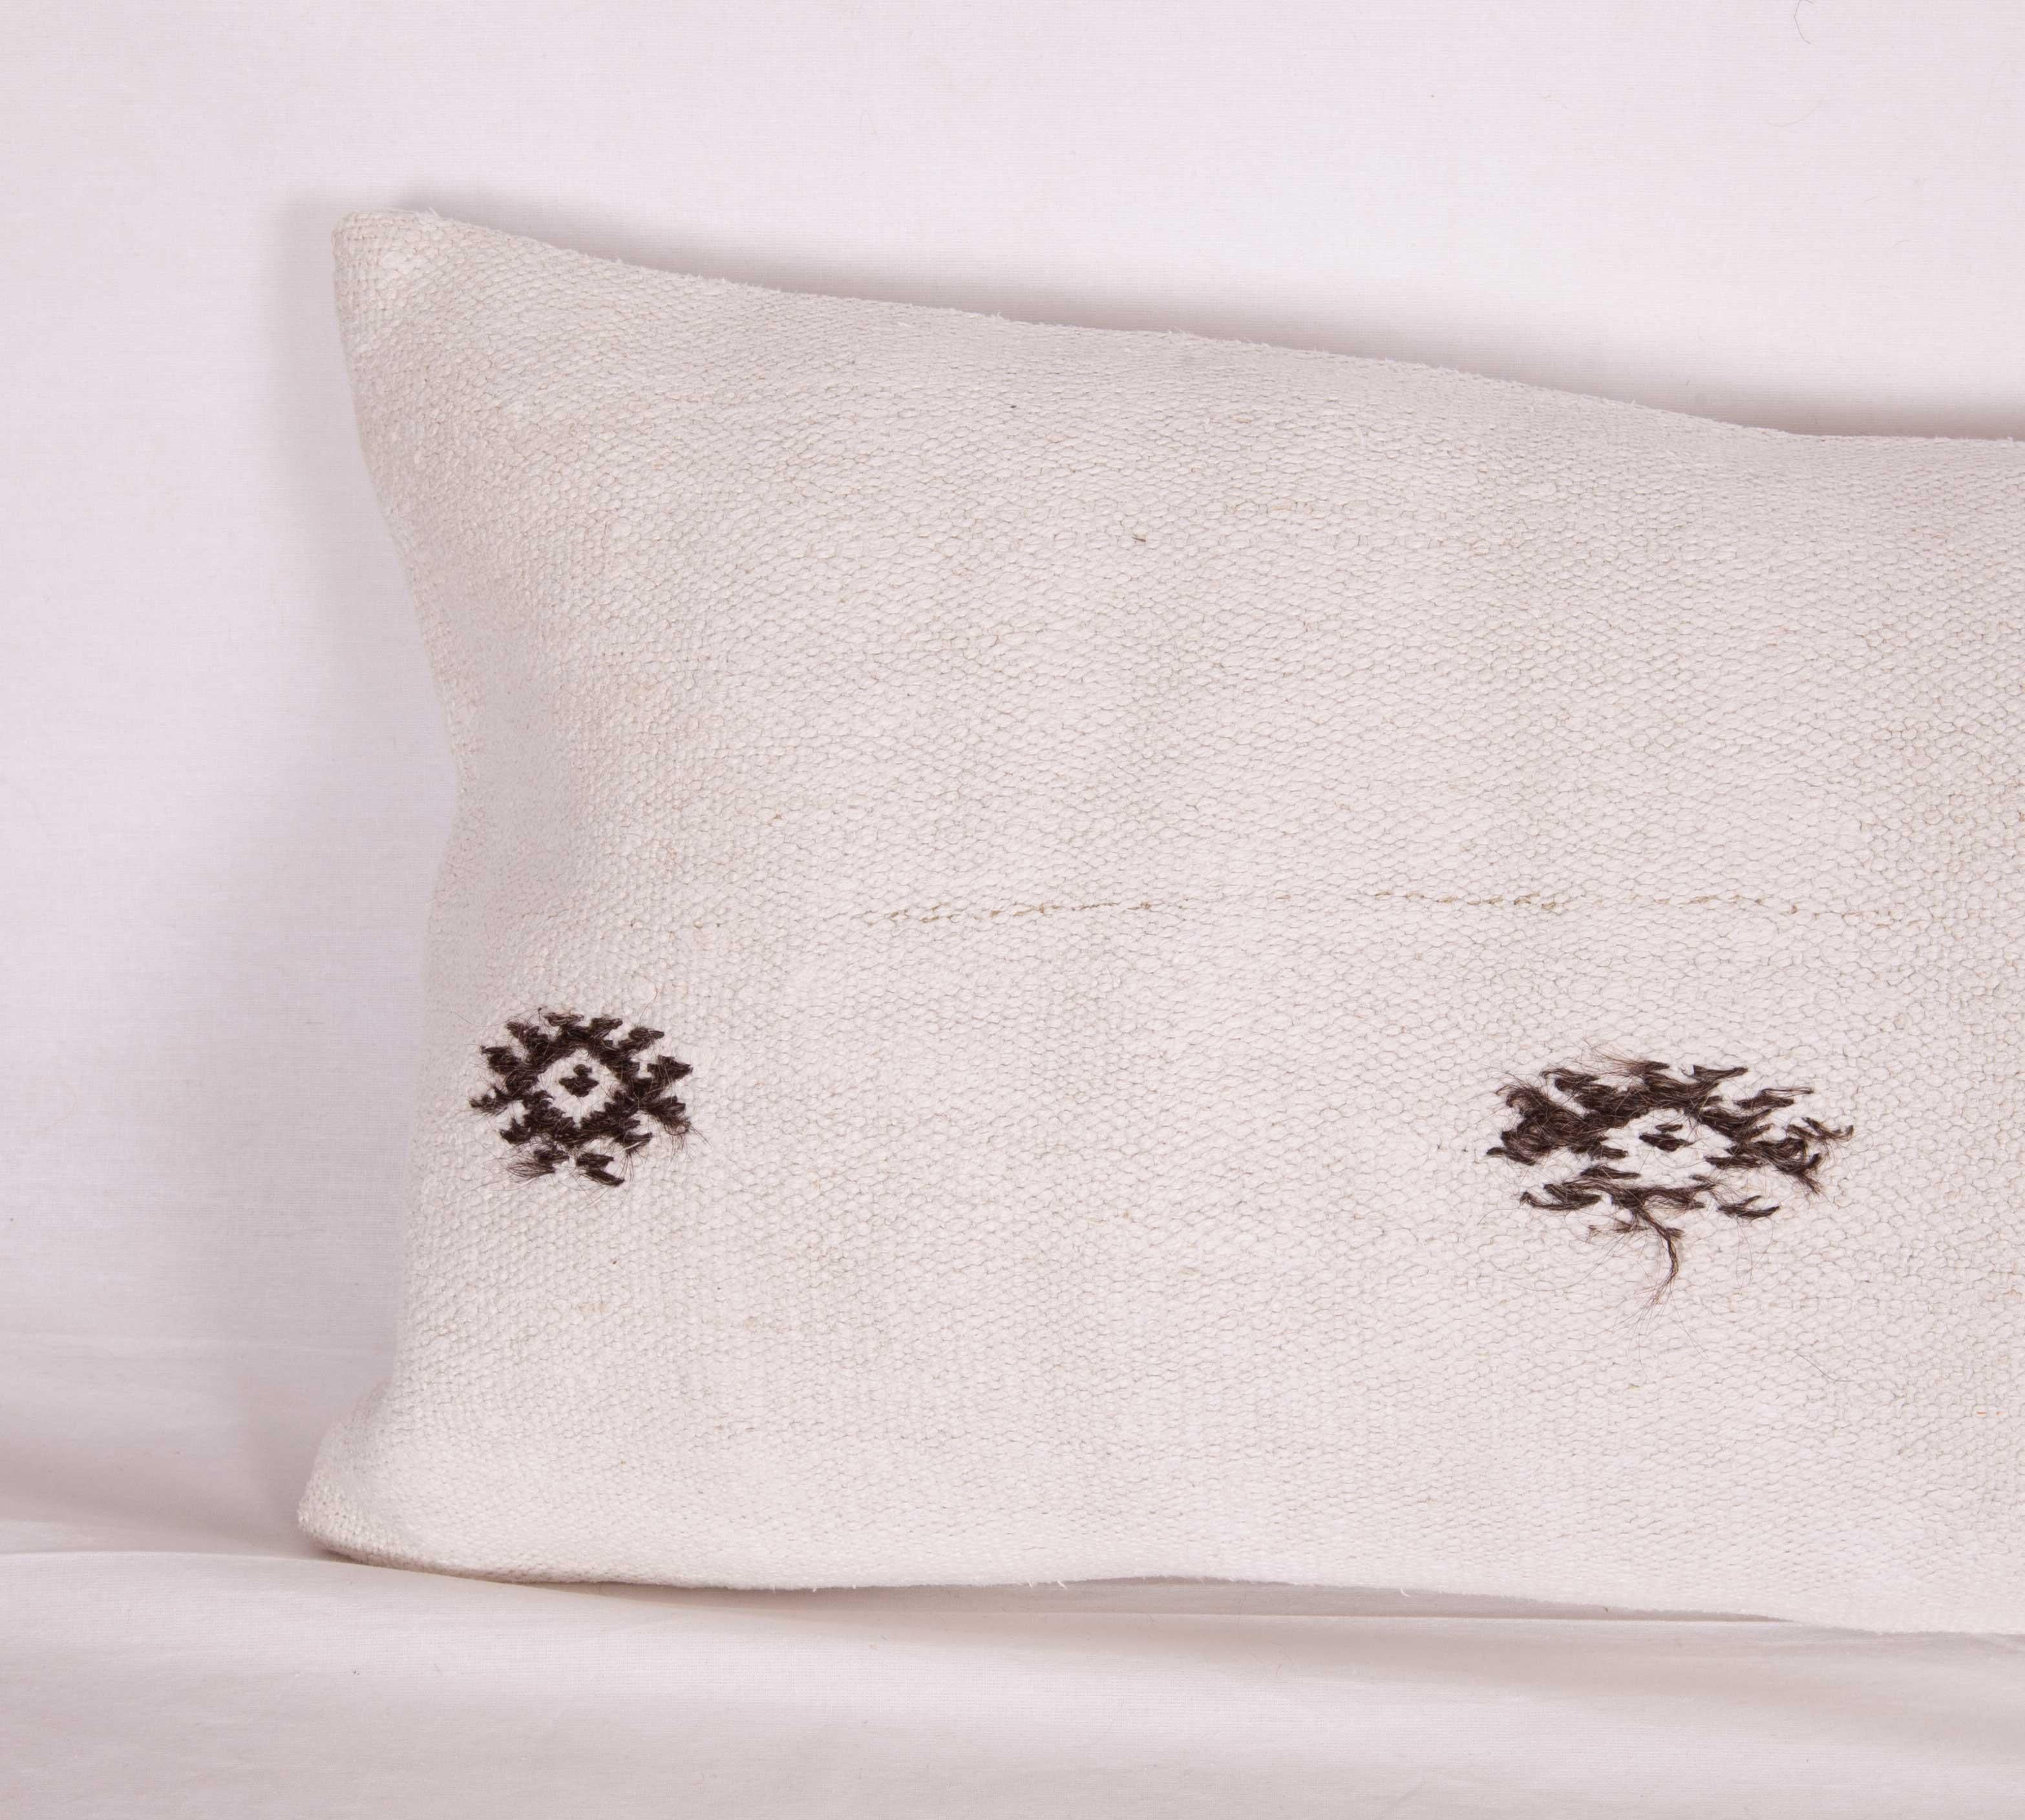 Hand-Woven Hemp Lumbar Pillow Case Made from a Mid-20th Century Turkish Hemp Kilim